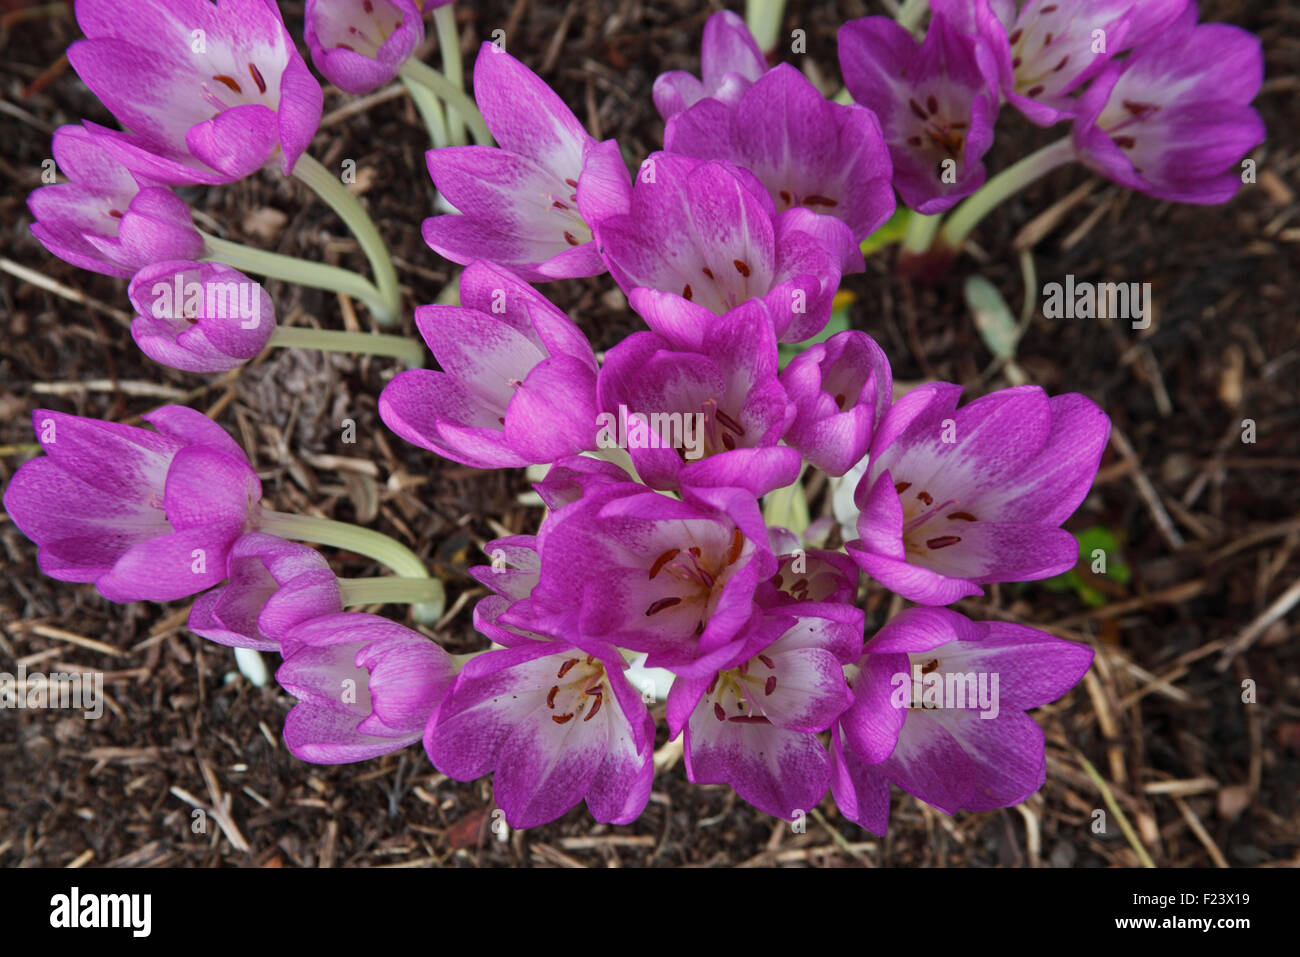 Colchicum 'Glory of Heemstede' Autumn crocus close up of flowers Stock Photo